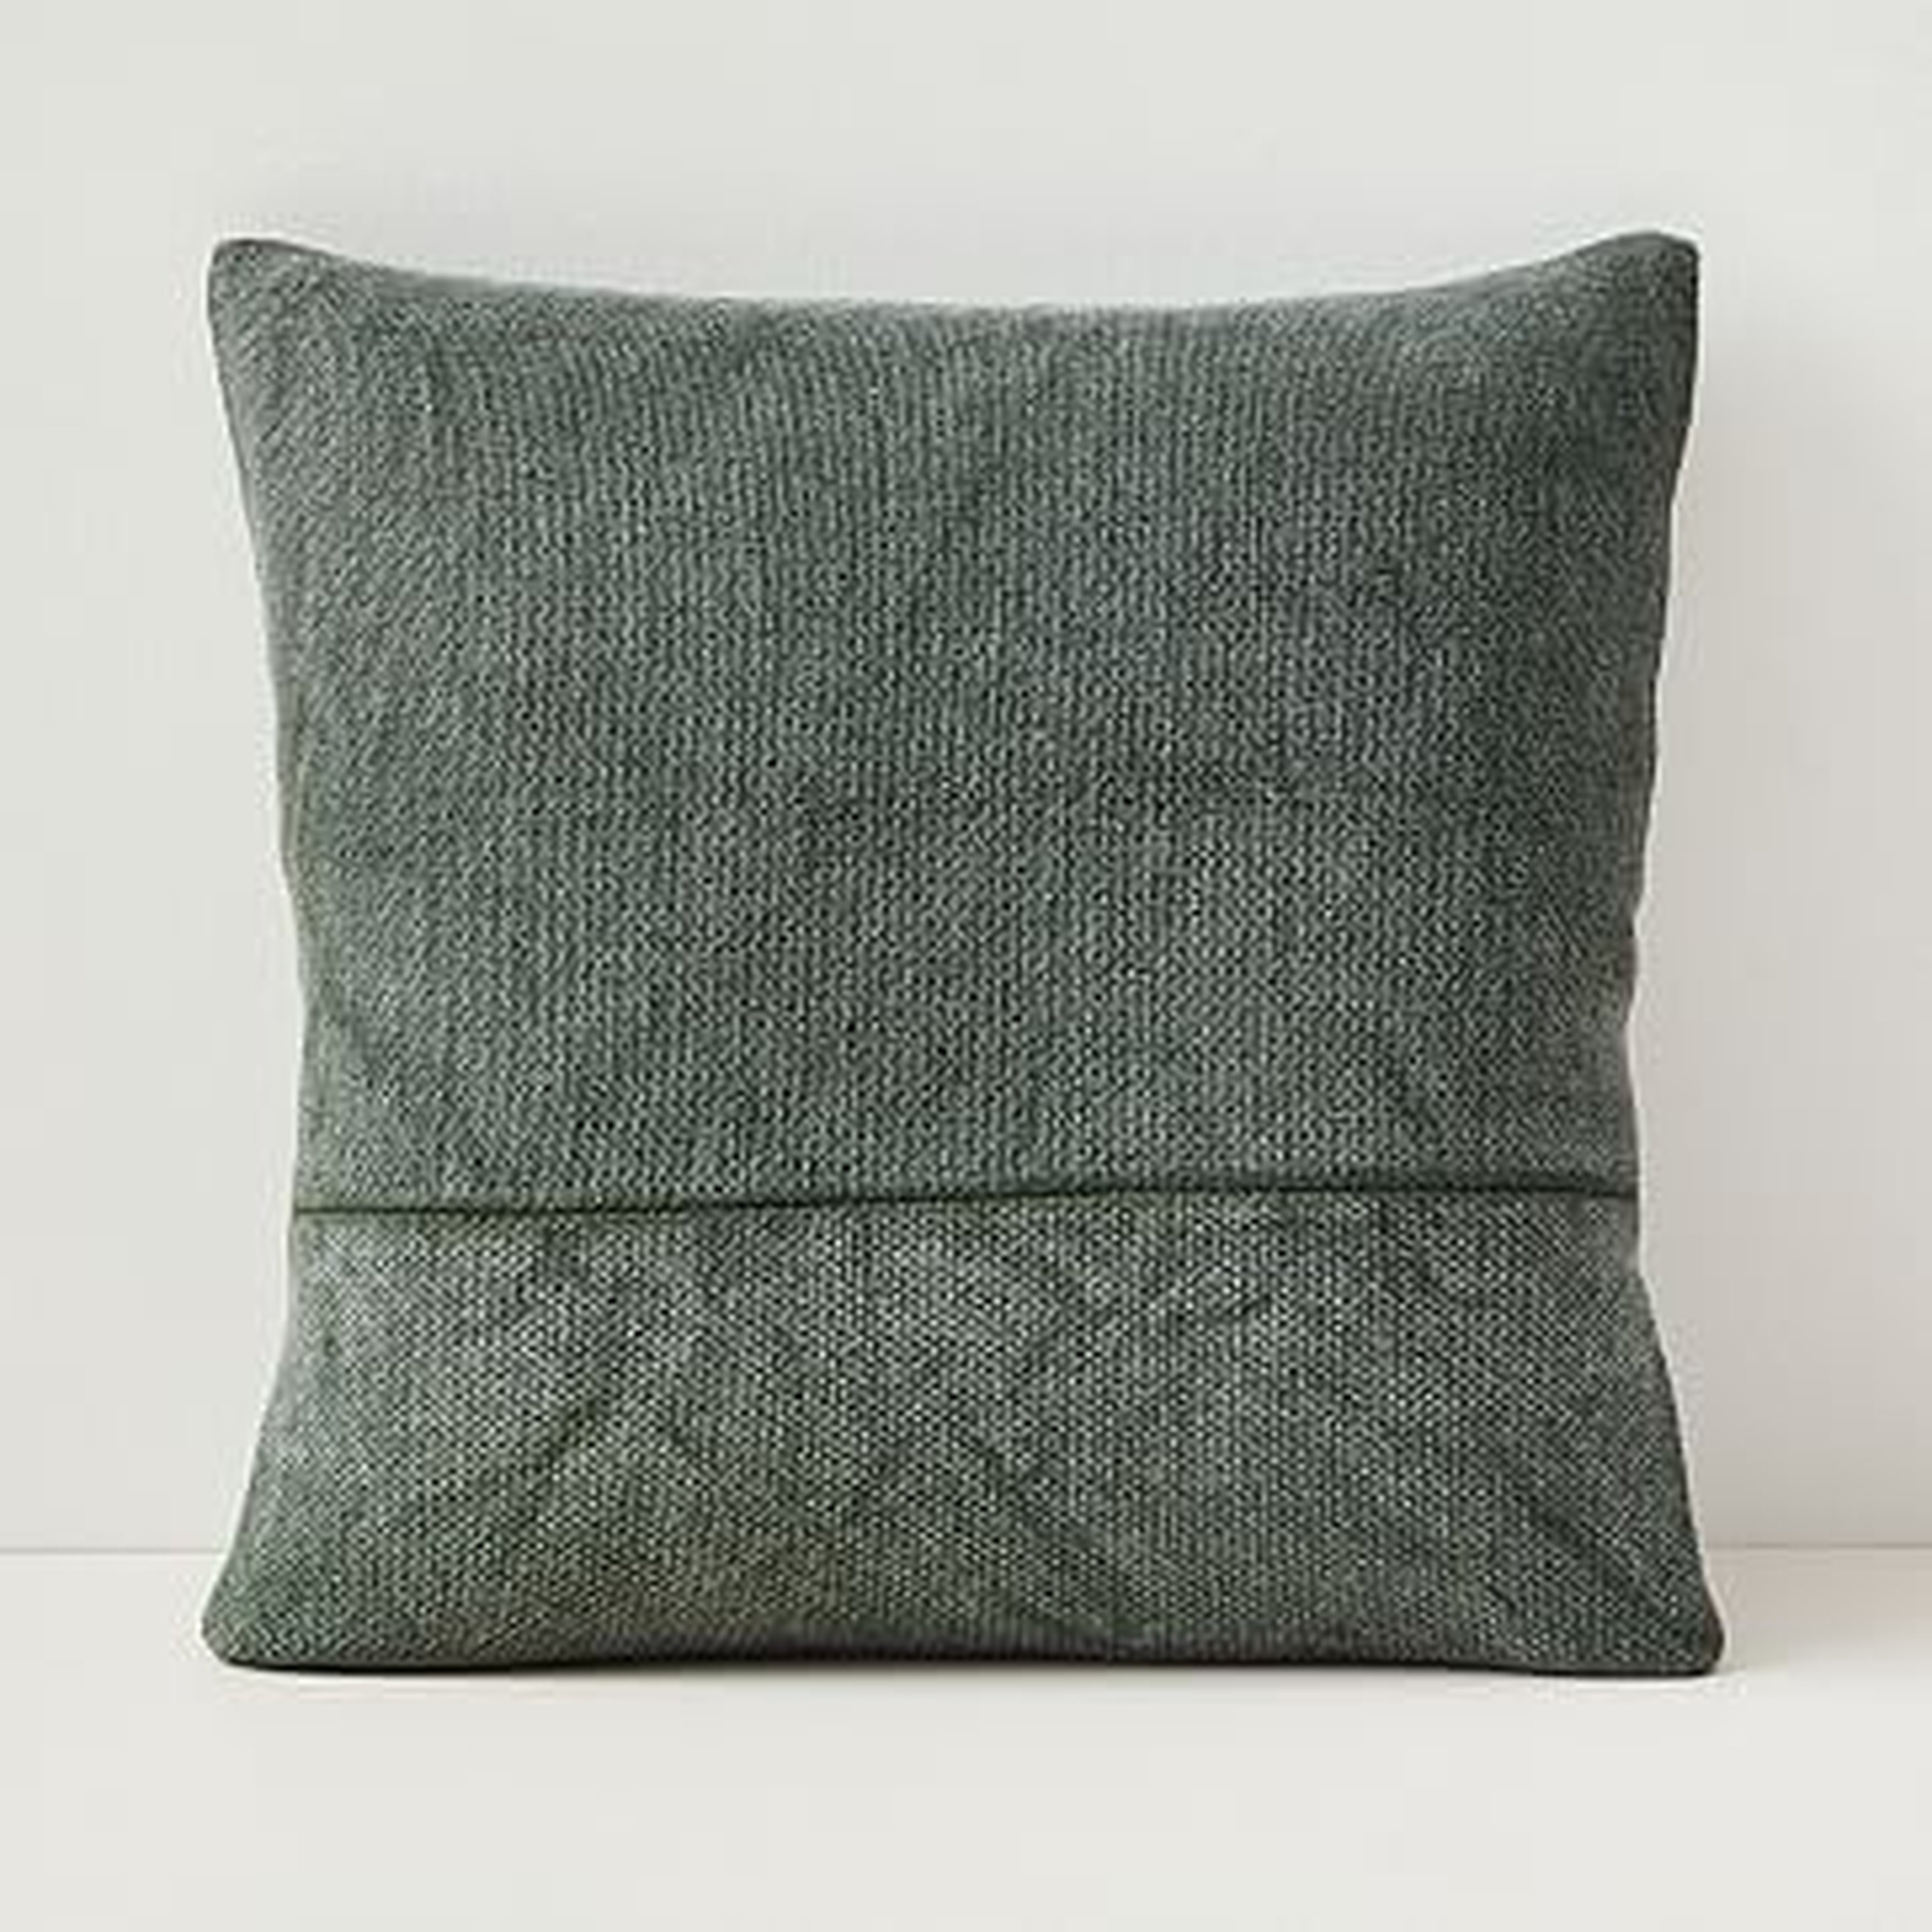 Cotton Canvas Pillow Cover, 18"x18", Beetle Green - West Elm